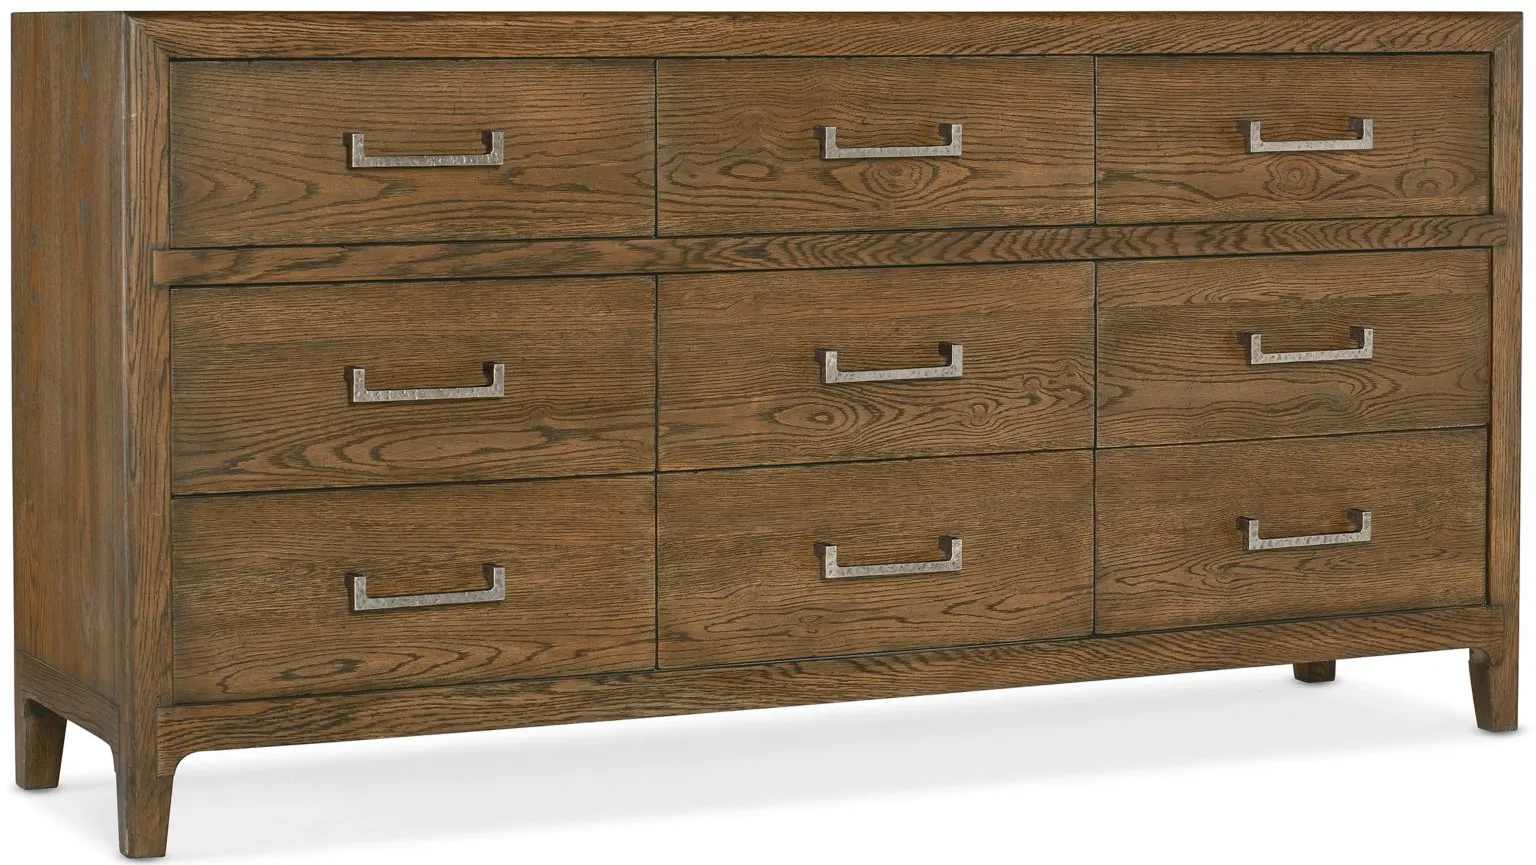 Chapman Nine-Drawer Dresser in Brown by Hooker Furniture